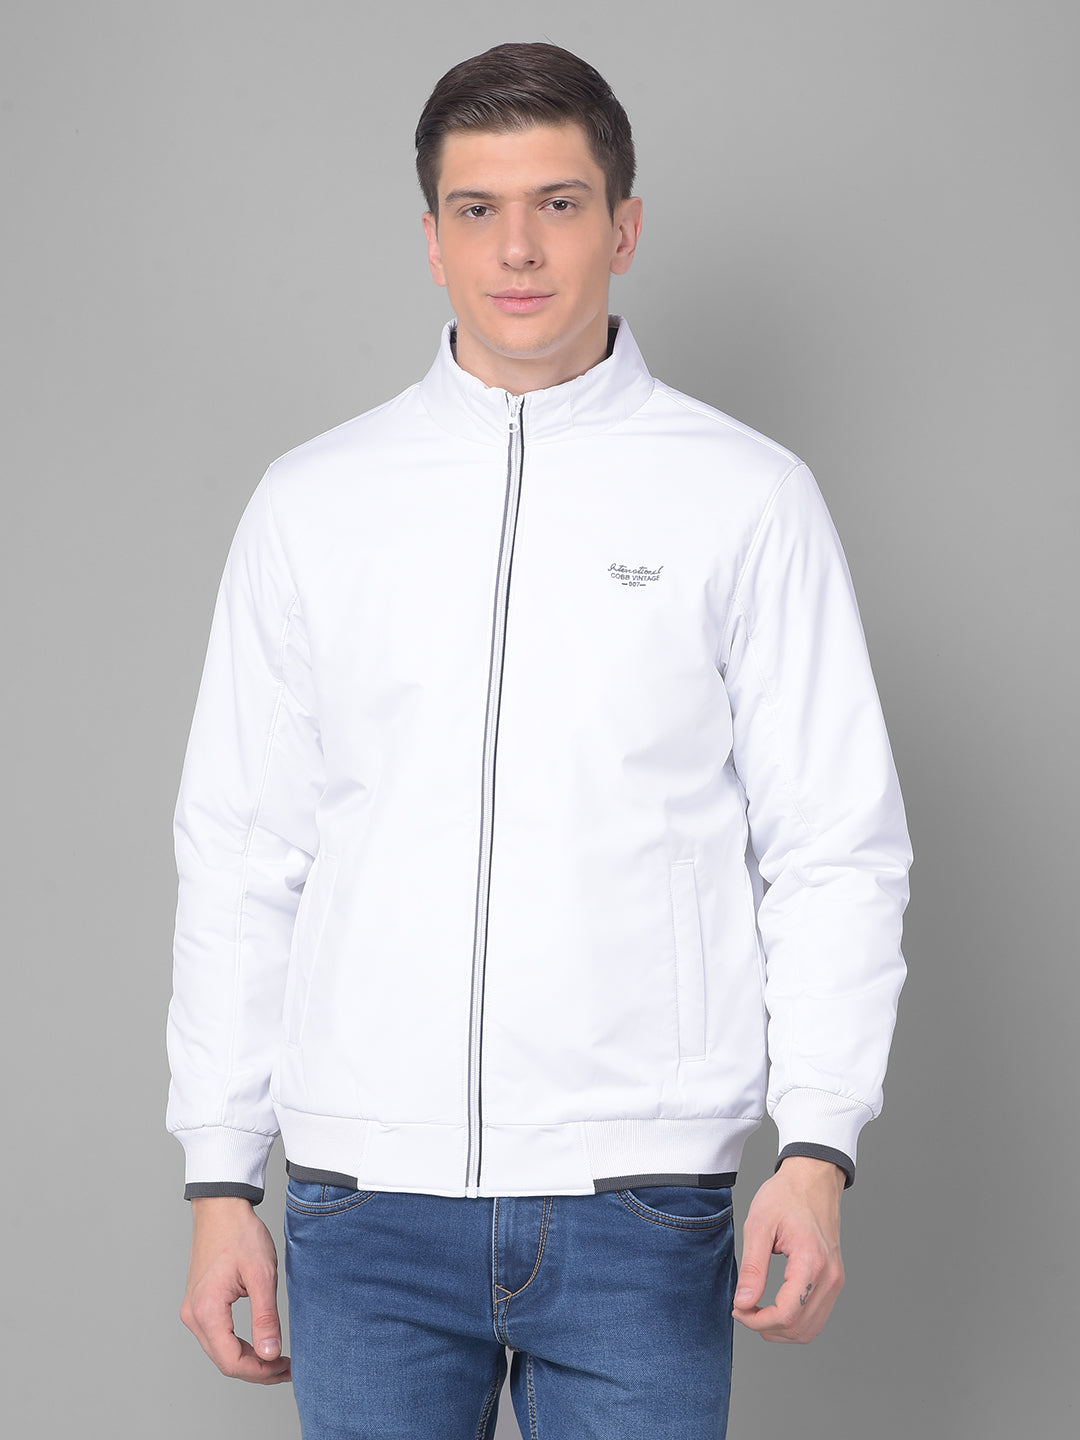 Buy Men's White Denim Jacket Shirt Online at Sassafras